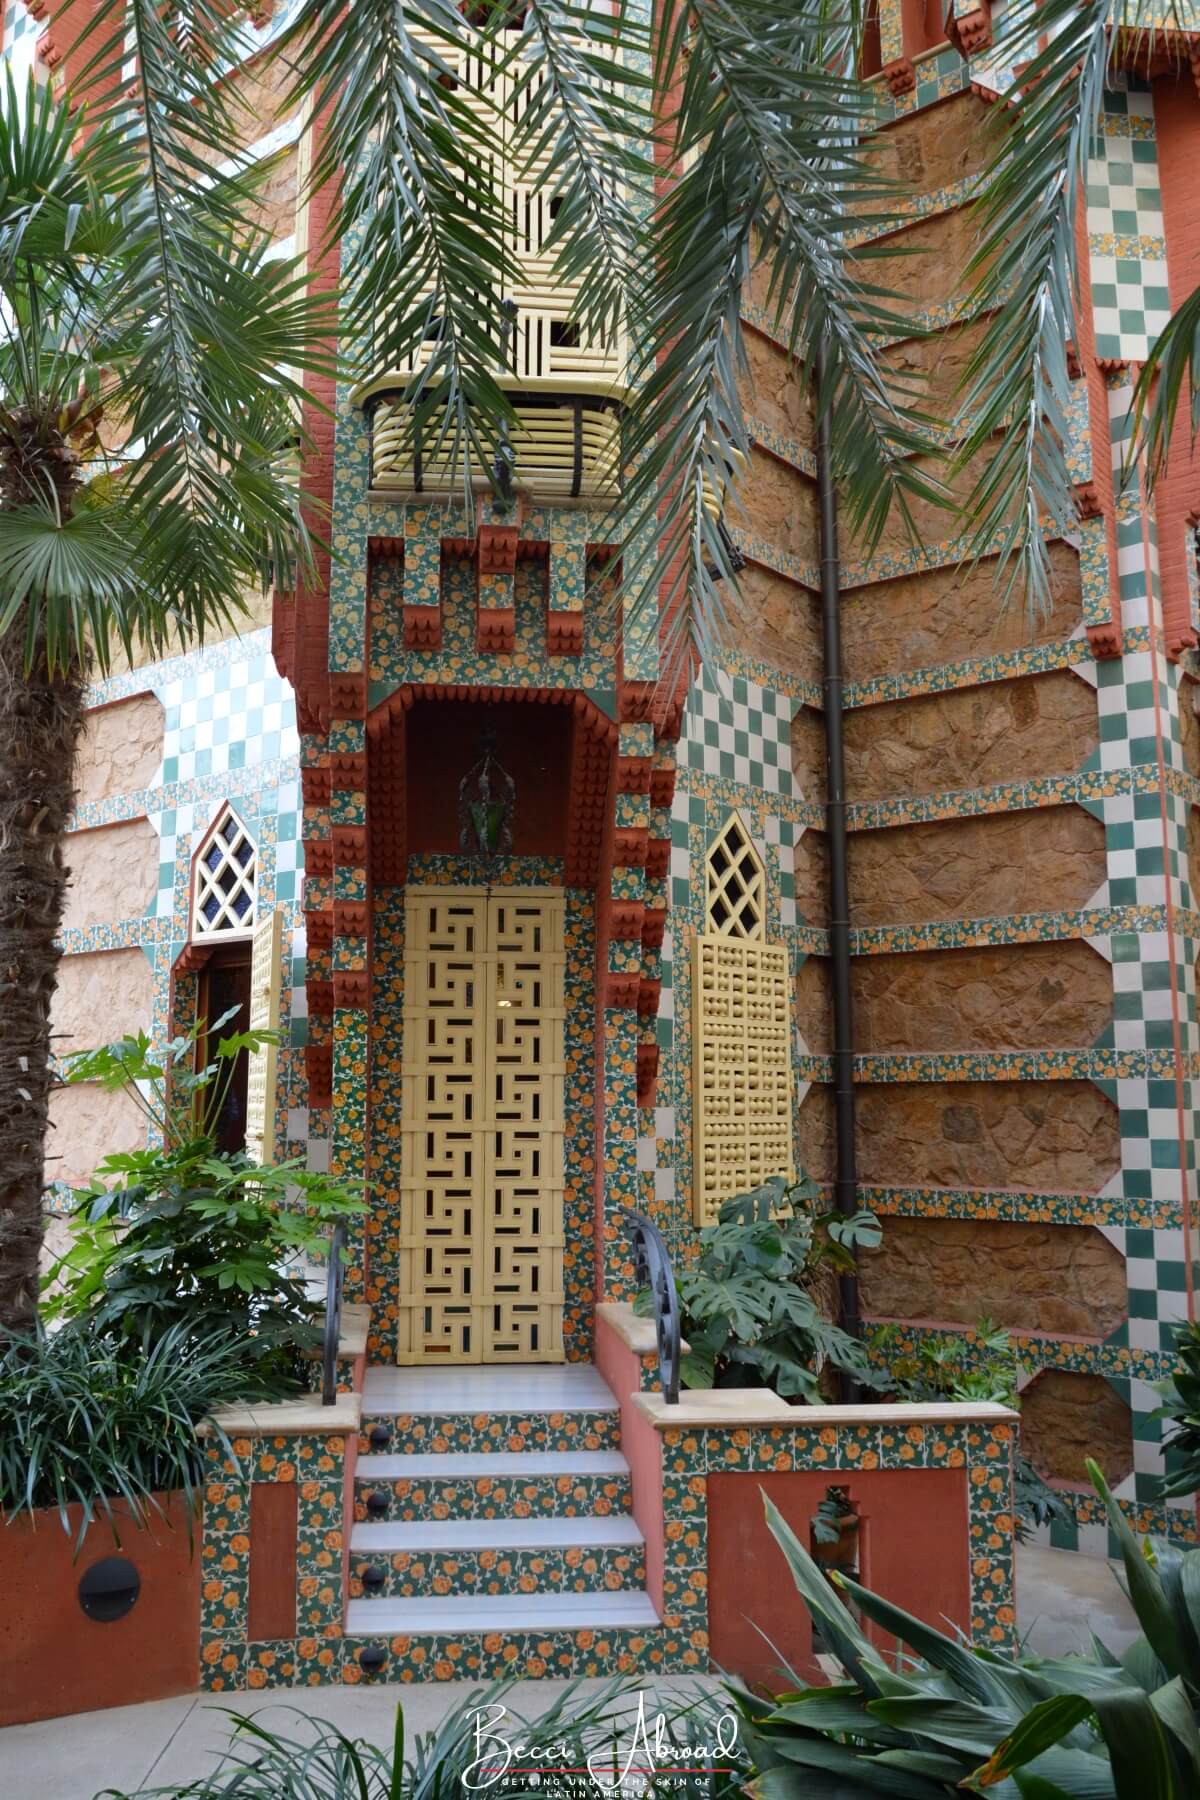 Details from inside Casa Vicens, Barcelona